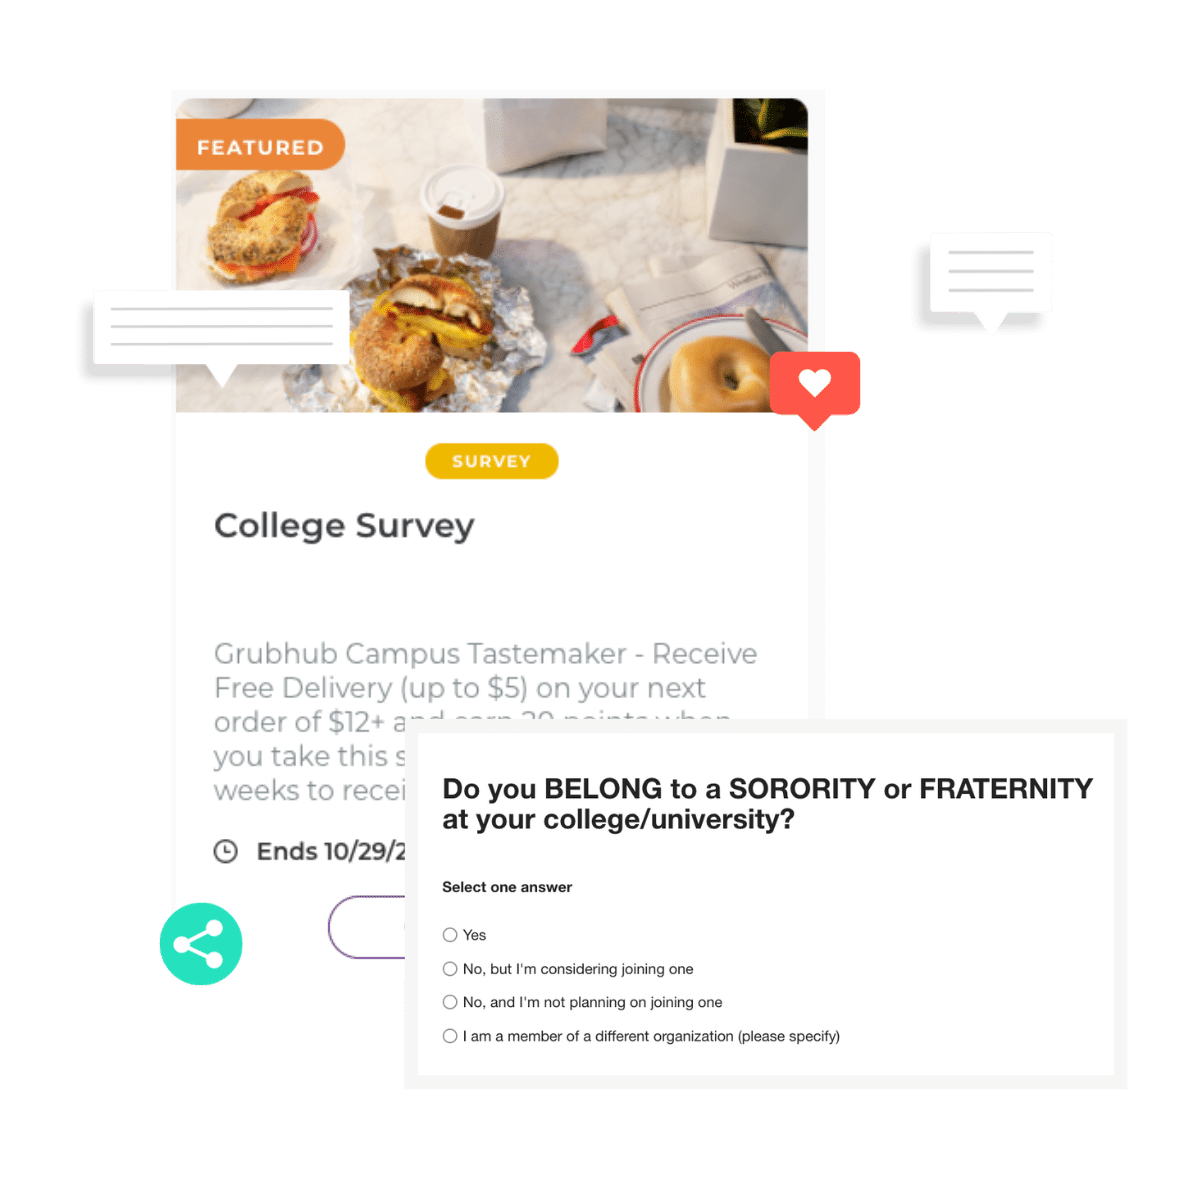 College survey by Grubhub